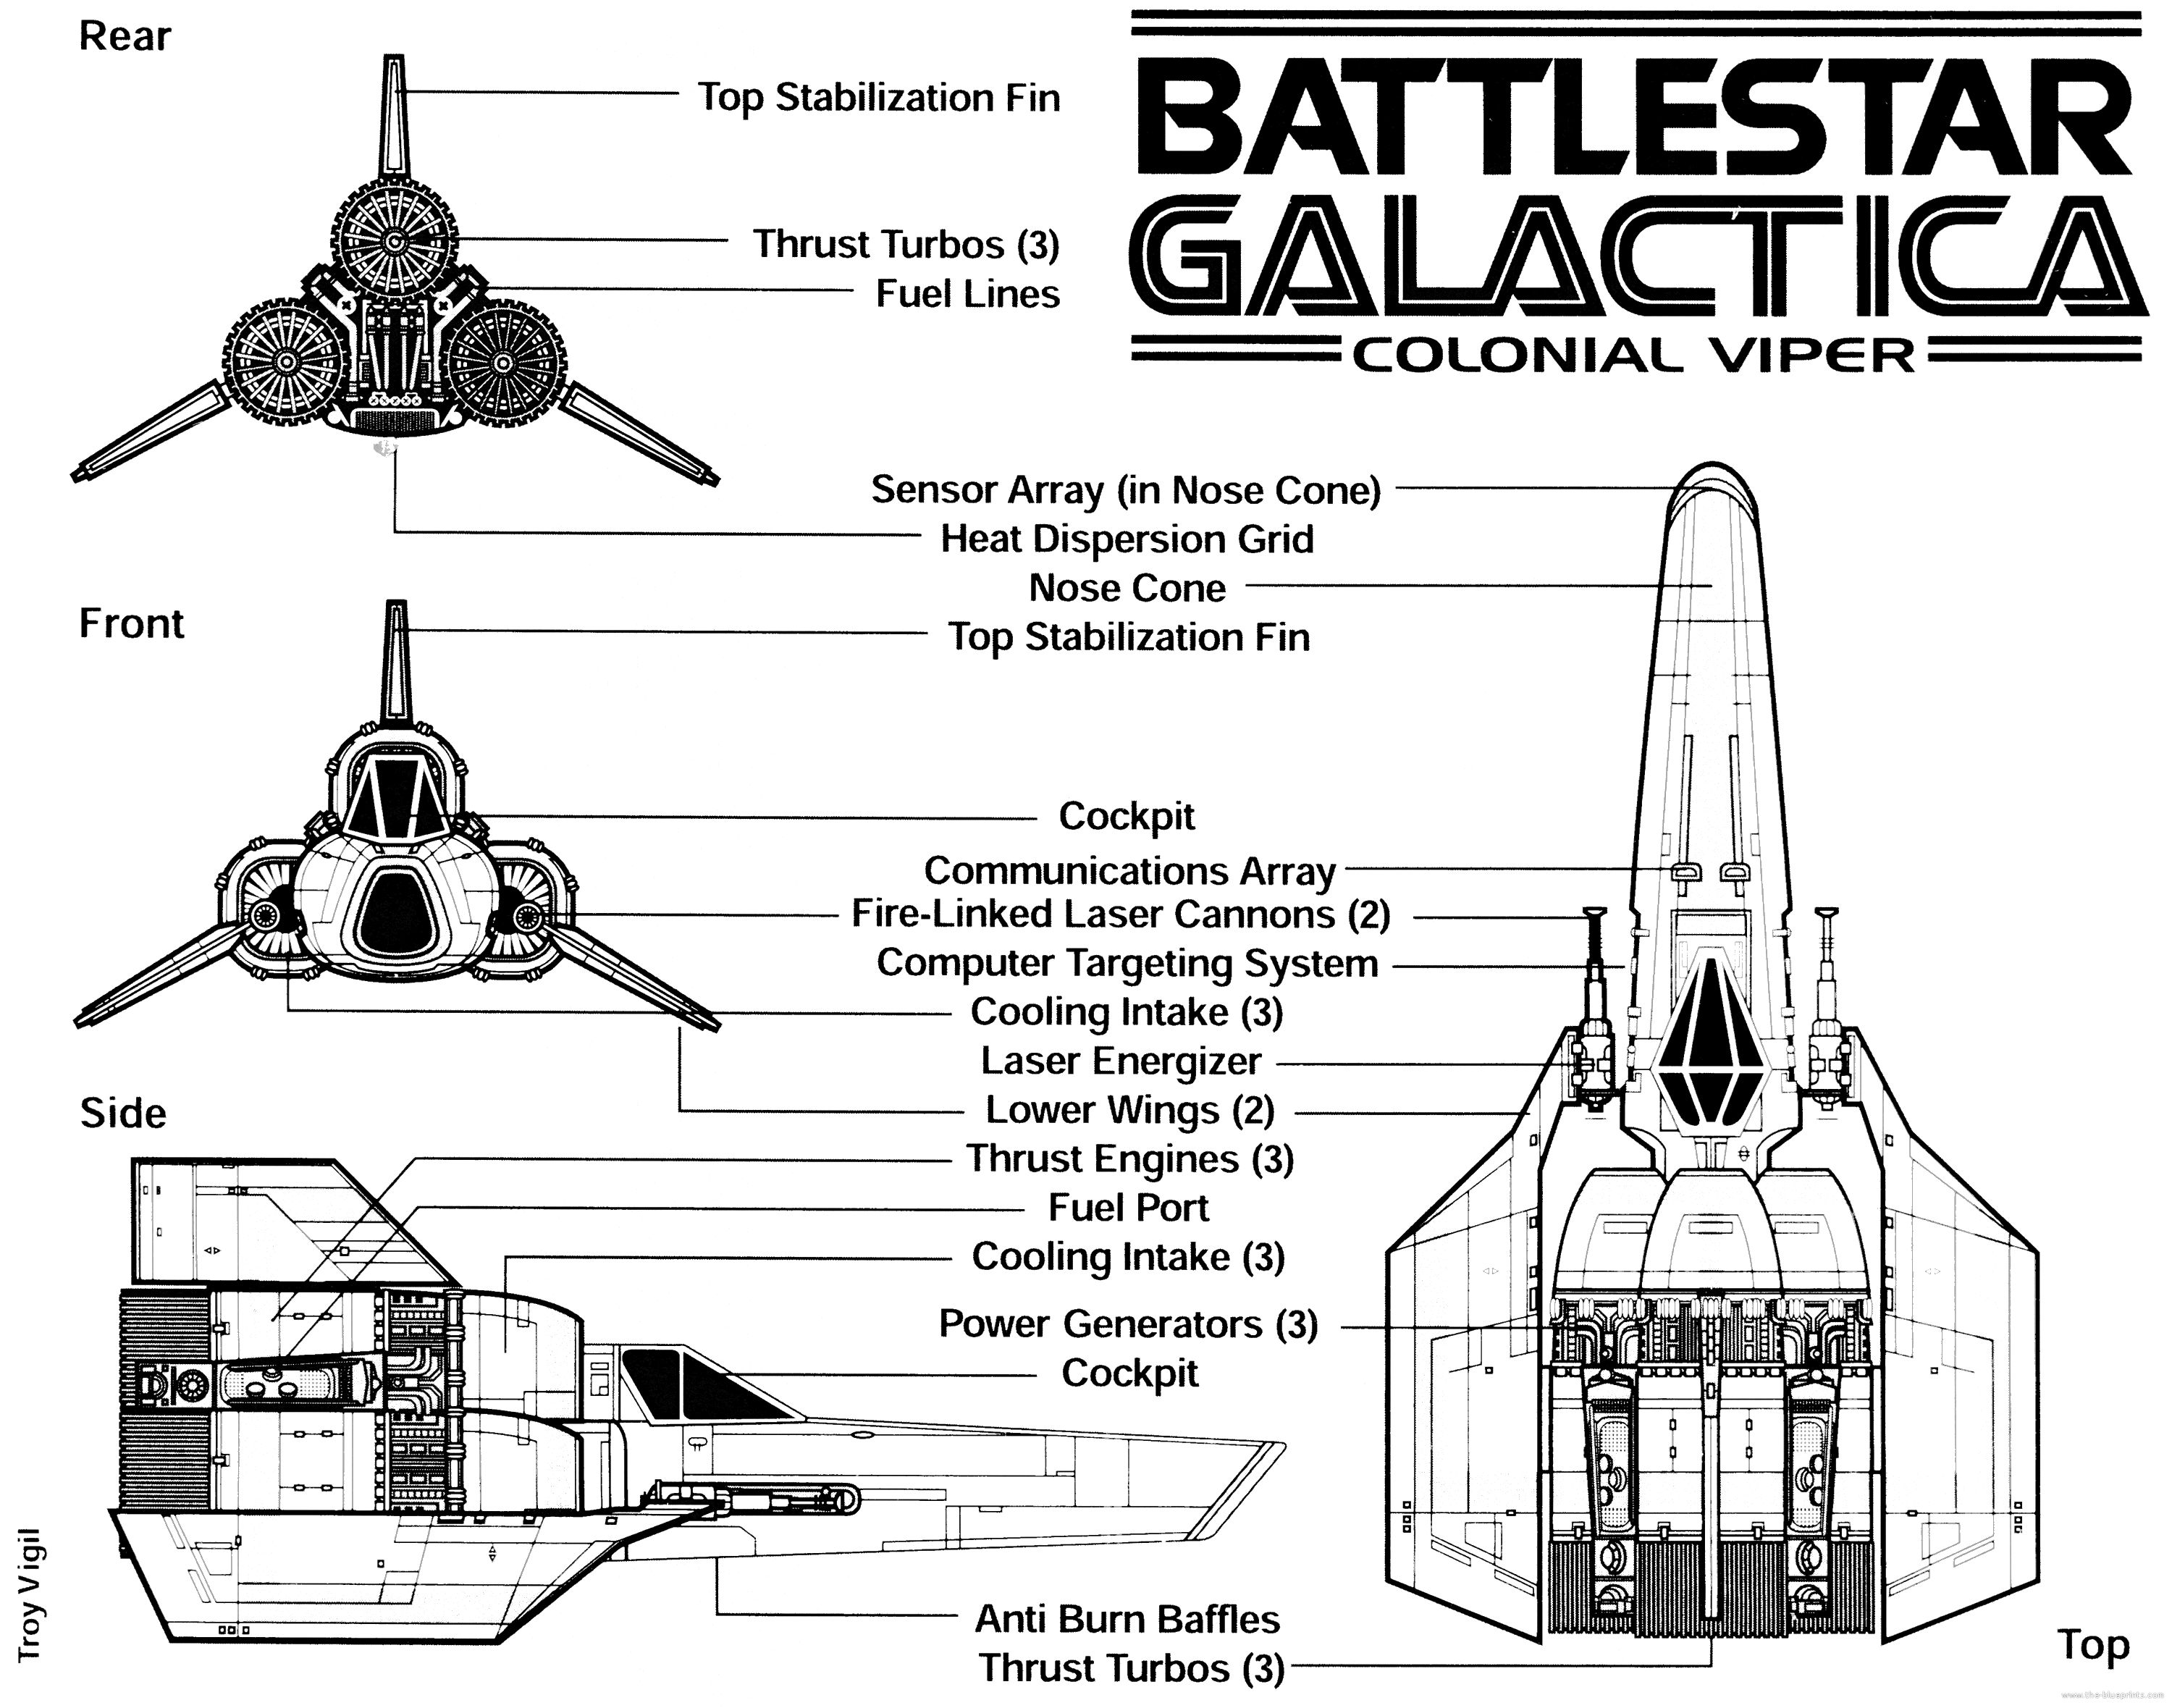 346802 baixar imagens programa de tv, battlestar galactica (1978), battlestar galactica - papéis de parede e protetores de tela gratuitamente